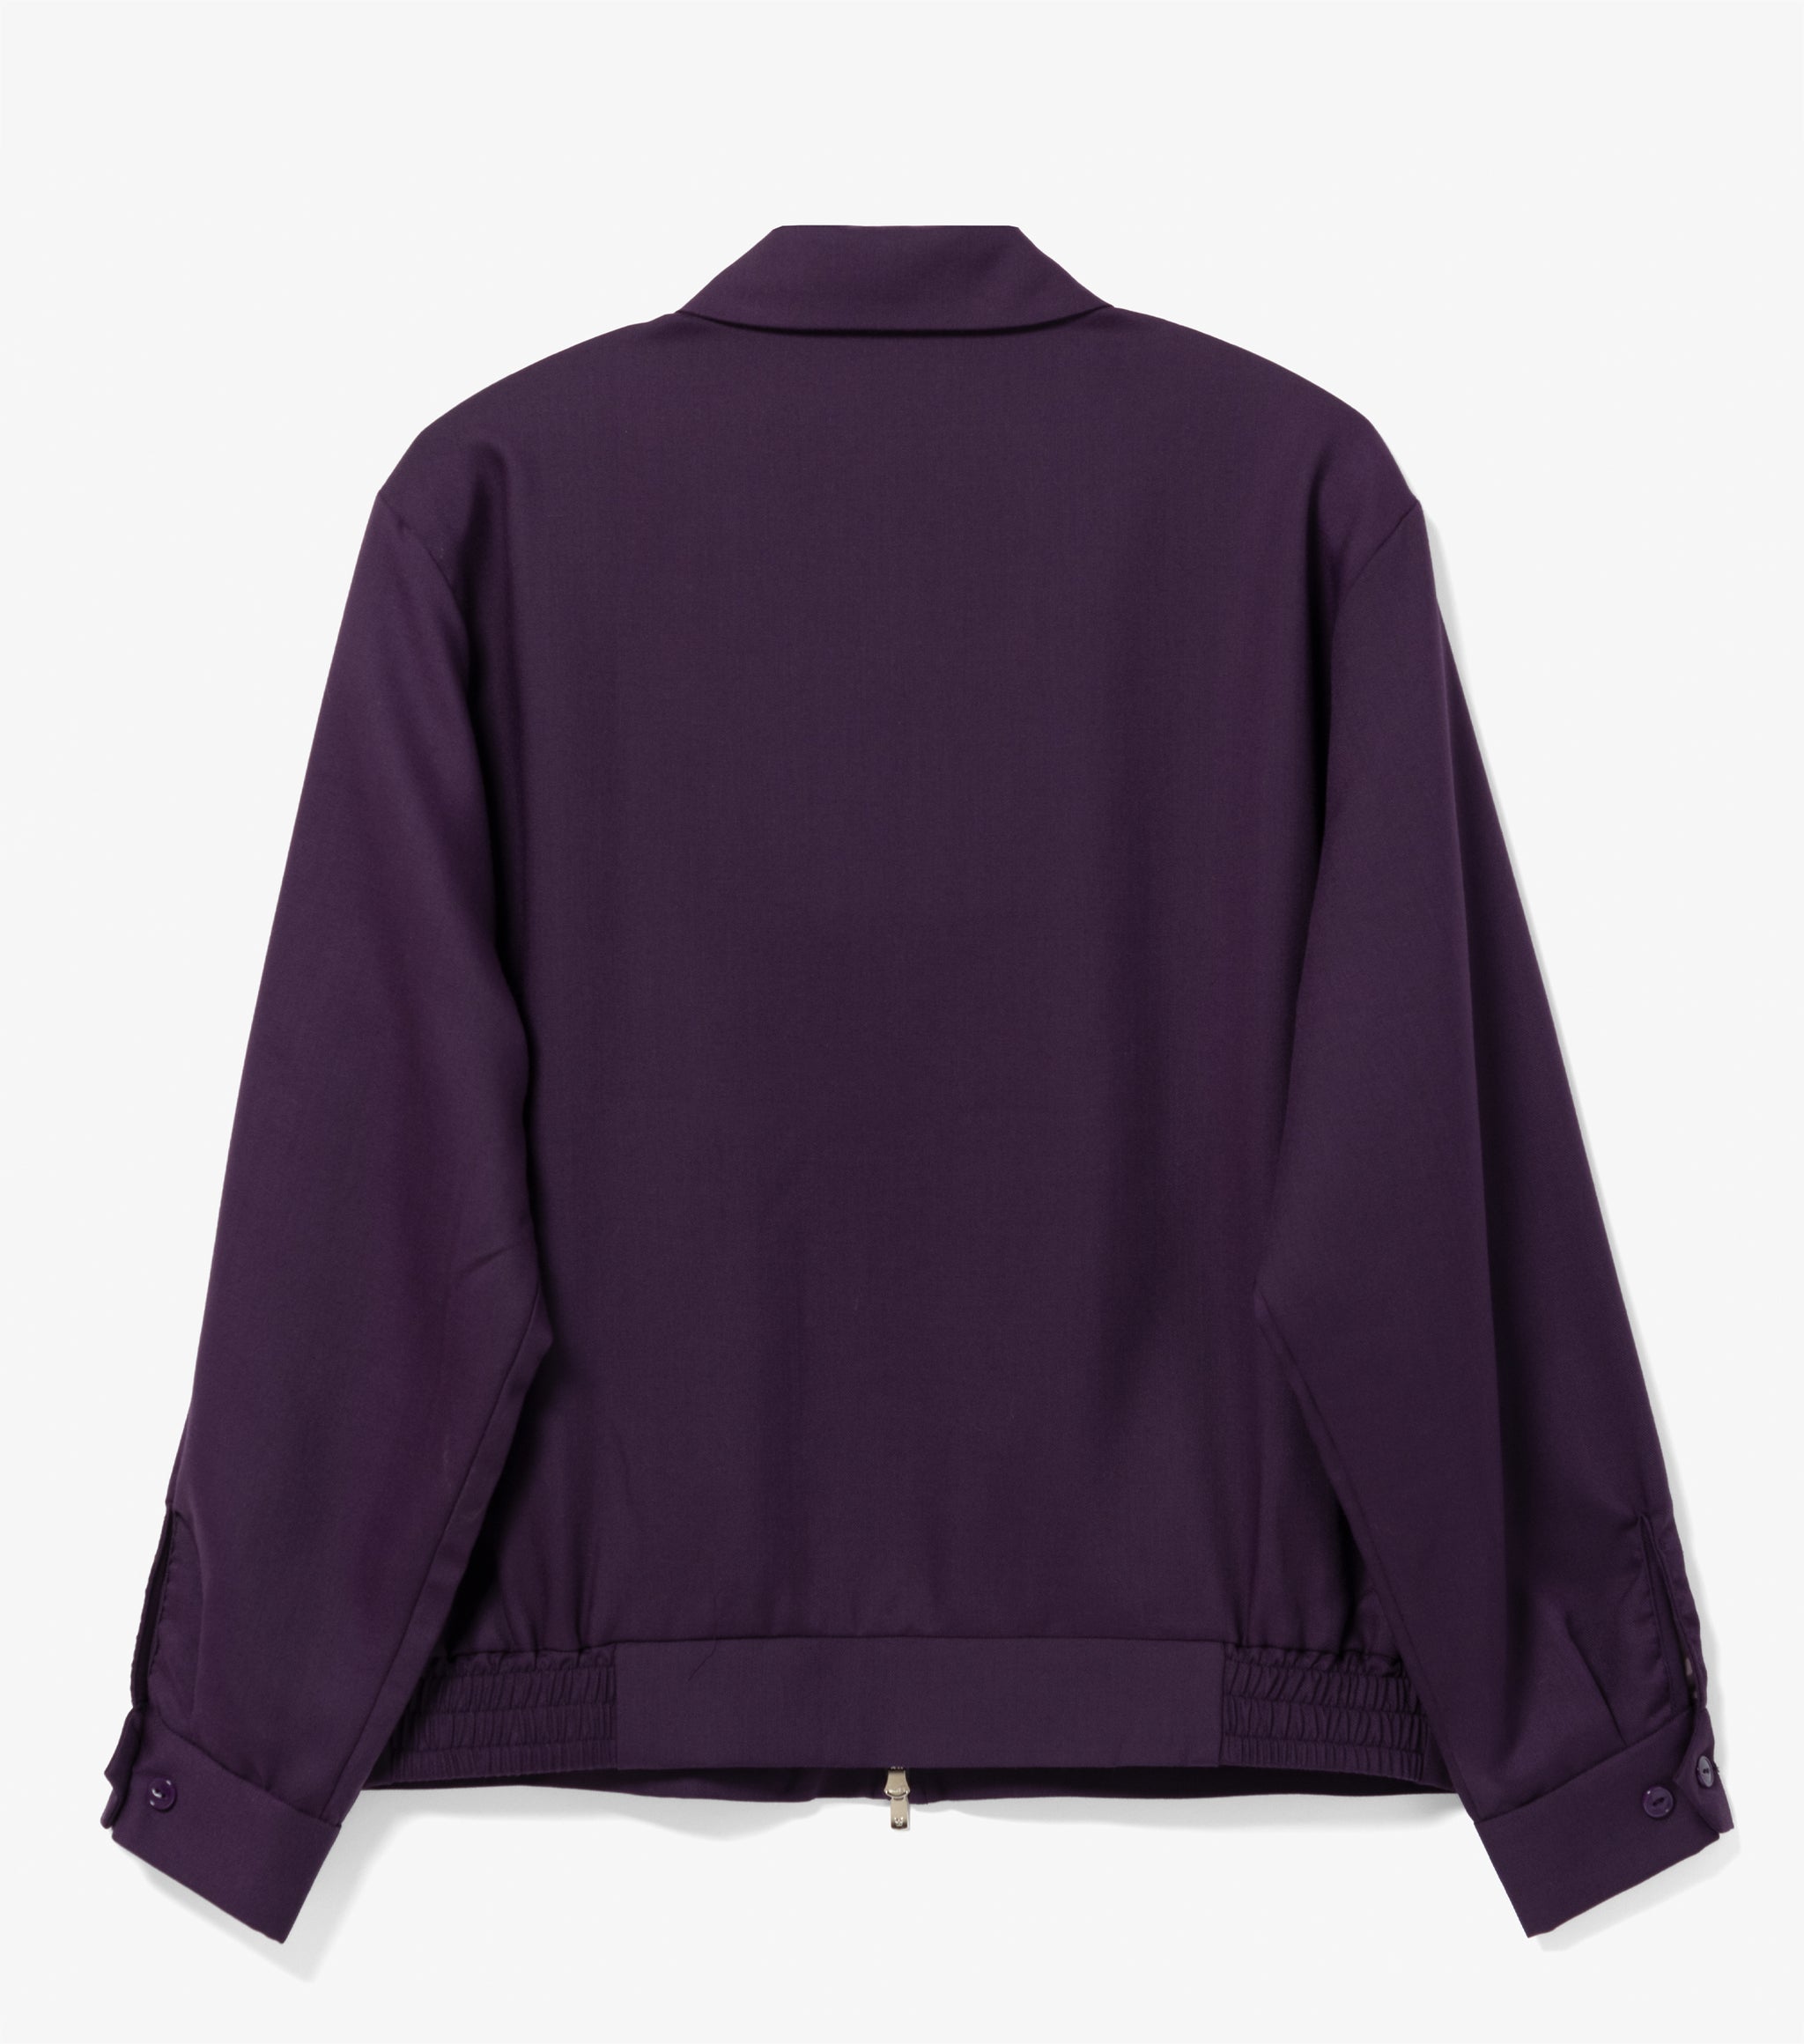 Sports Jacket (Purple)